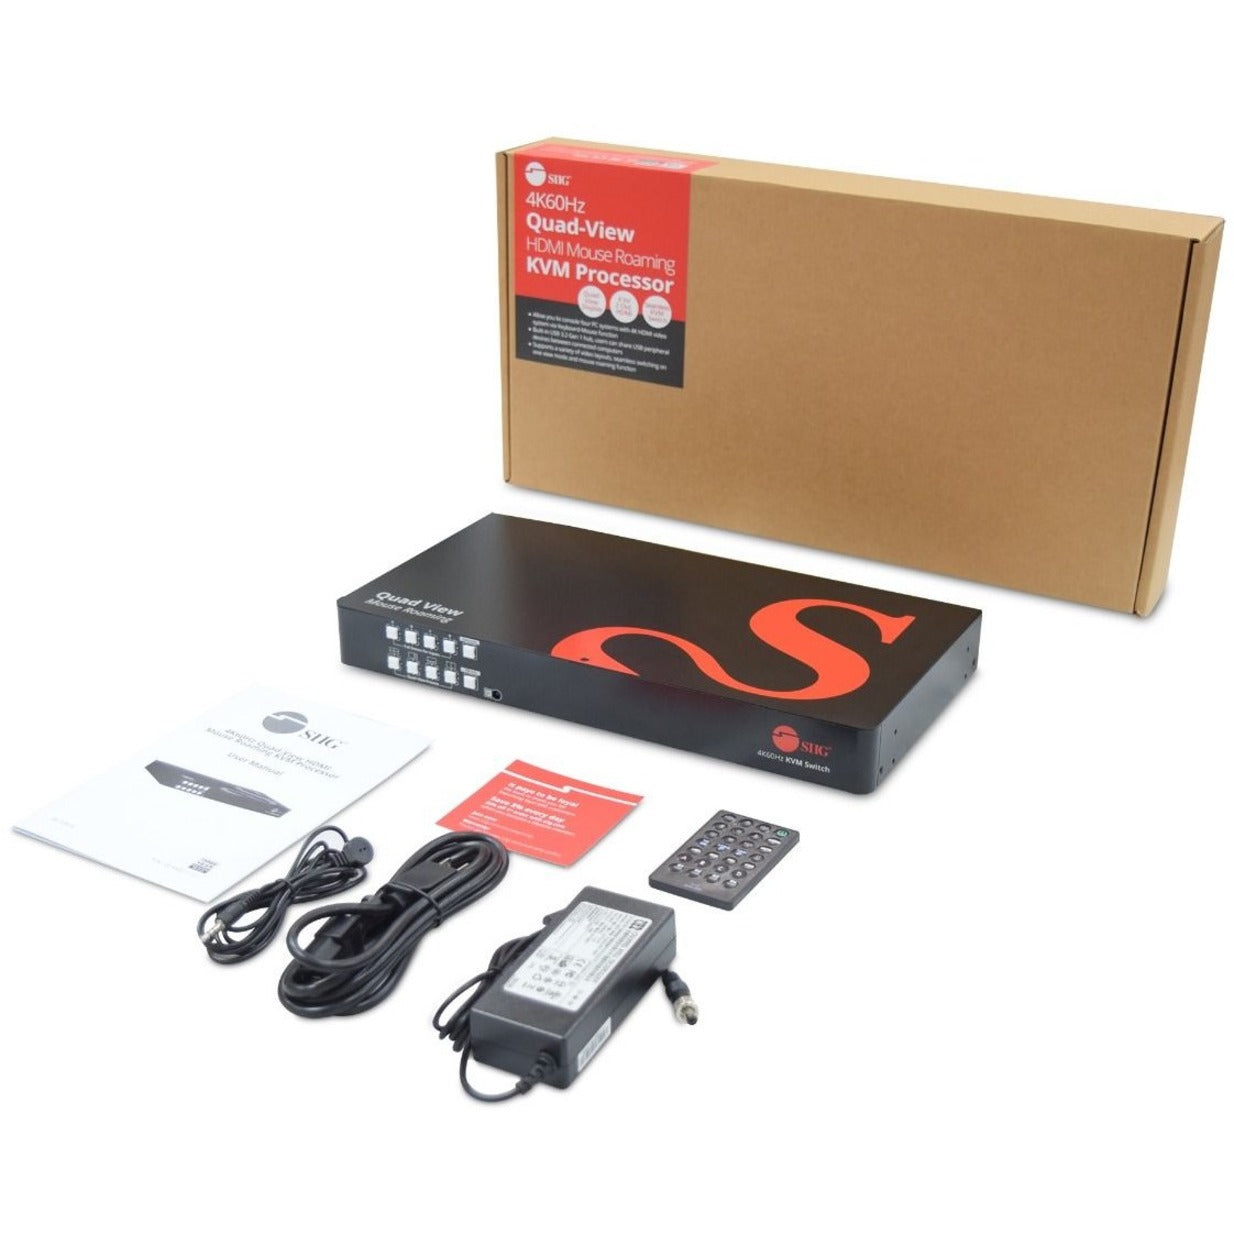 SIIG CE-KV0J11-S1 4K60Hz Quad-View HDMI Mouse Roaming KVM Processor, Plug and Play, 3 Year Warranty